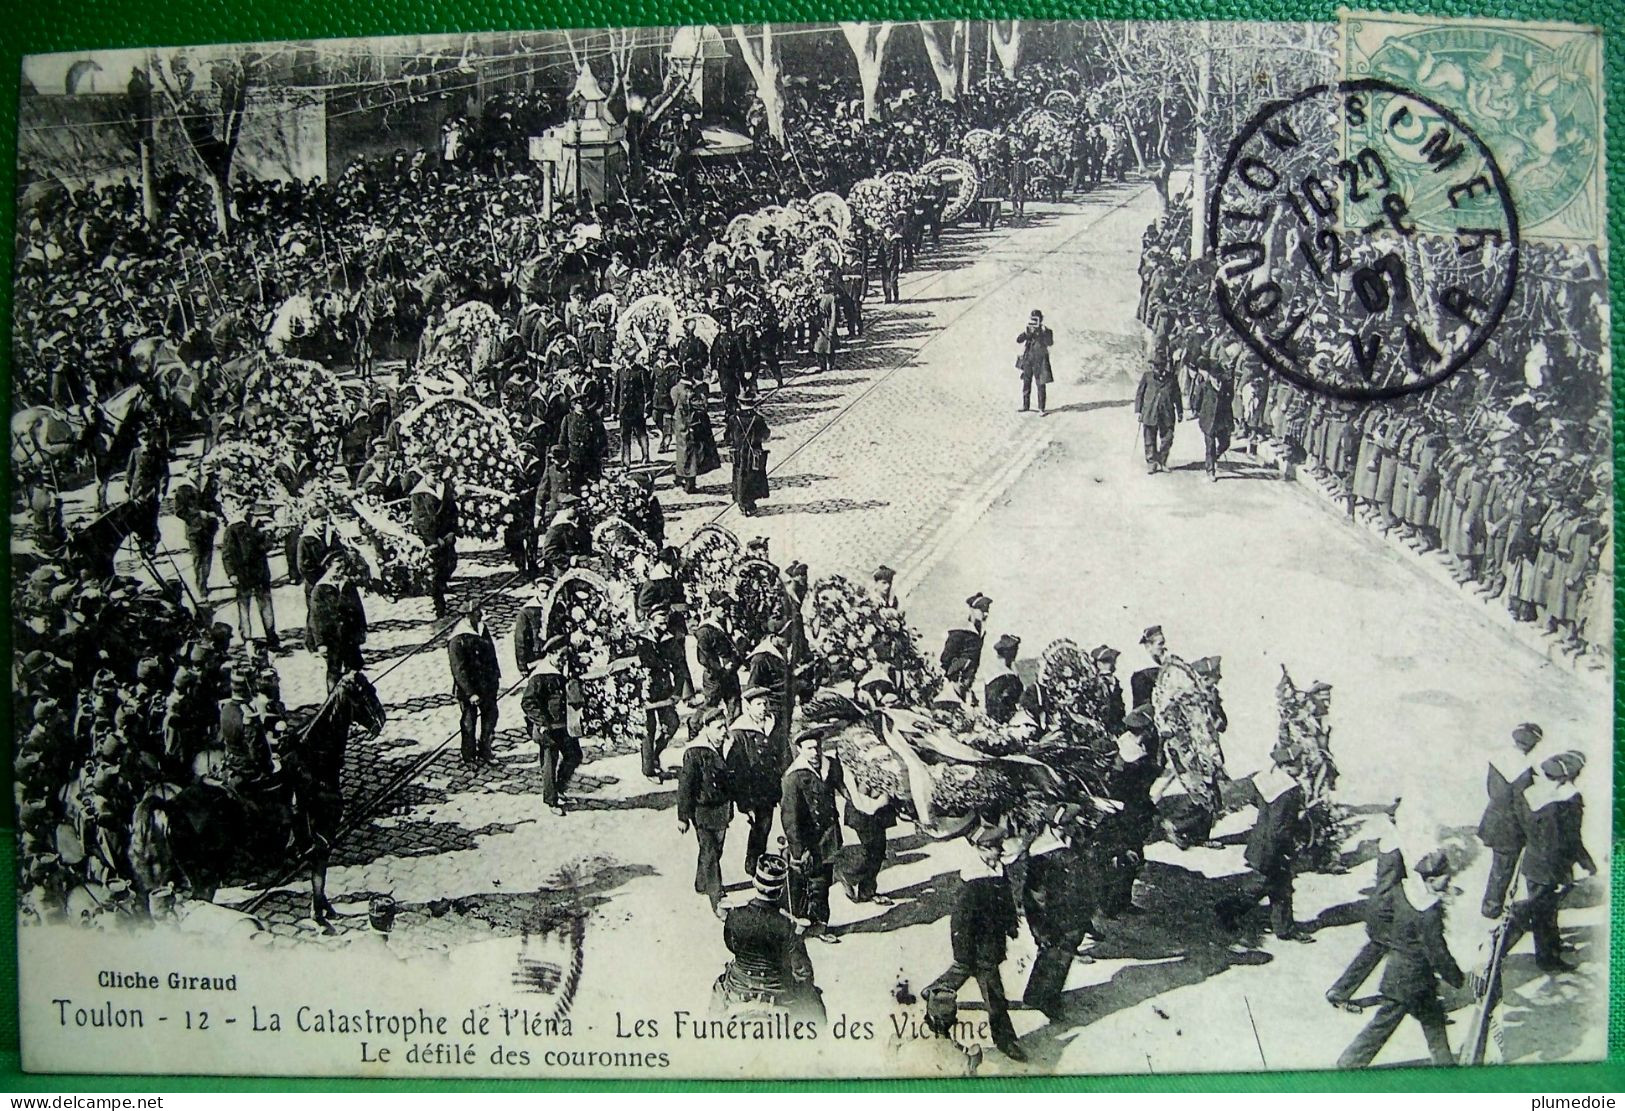 Cpa  EXPLOSION DU CUIRASSE IENA Toulon  FUNERAILLES,  DEFILE DES COURONNES . 1907 MARINS MARINE FRANCAISE  EDIT GIRAUD - Funeral